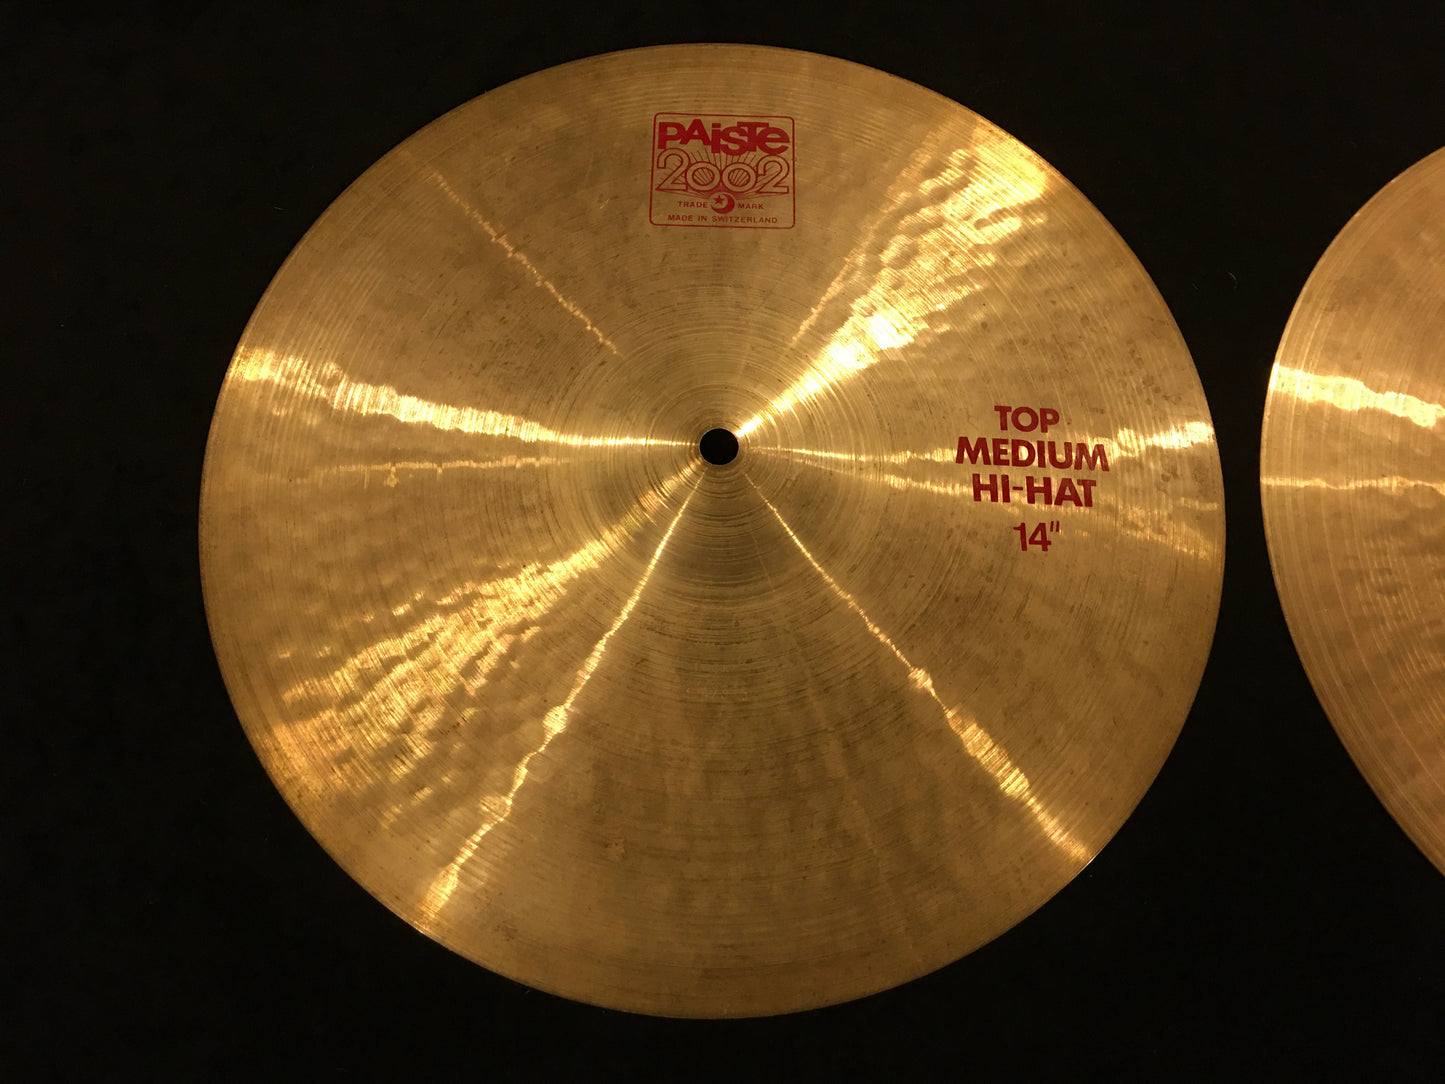 14" Paiste Red Label 2002 Medium Hi-Hat Cymbals 836/1020g